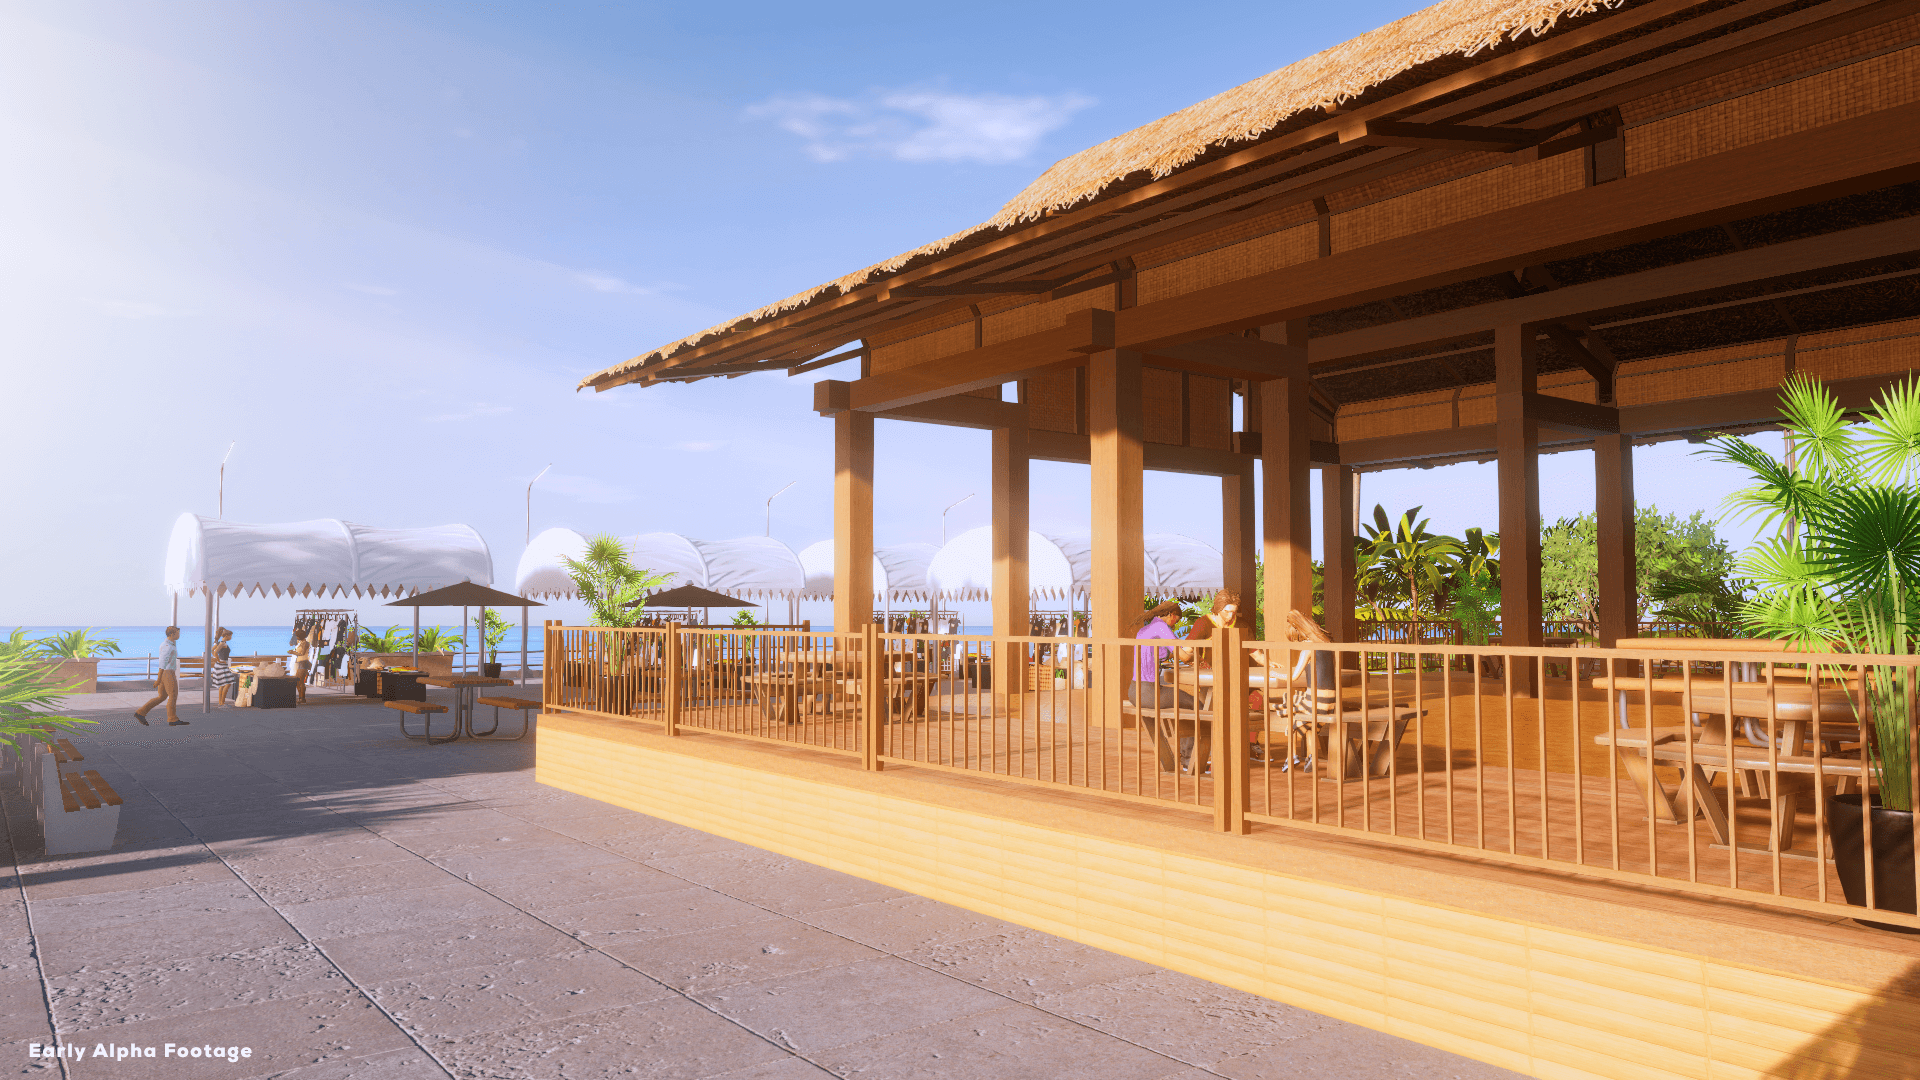 Hotel Life – A Resort Simulator (7)